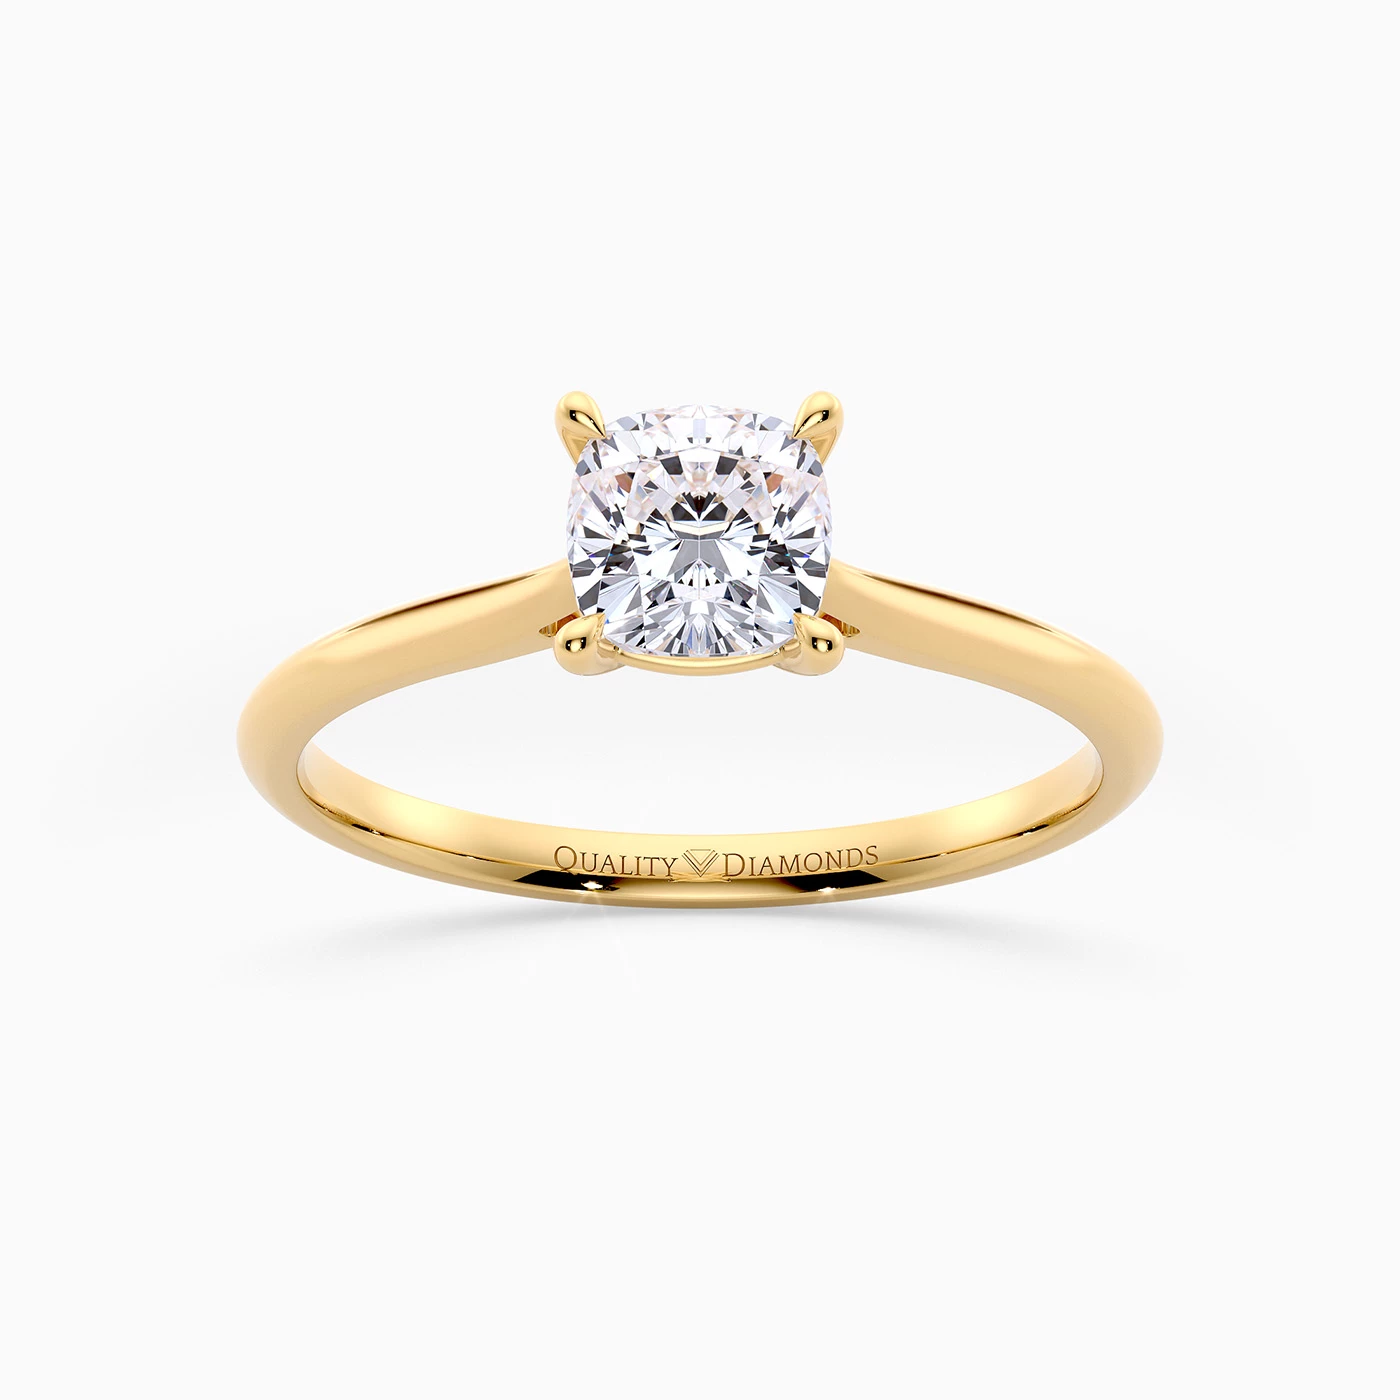 Cushion Carys Diamond Ring in 9K Yellow Gold